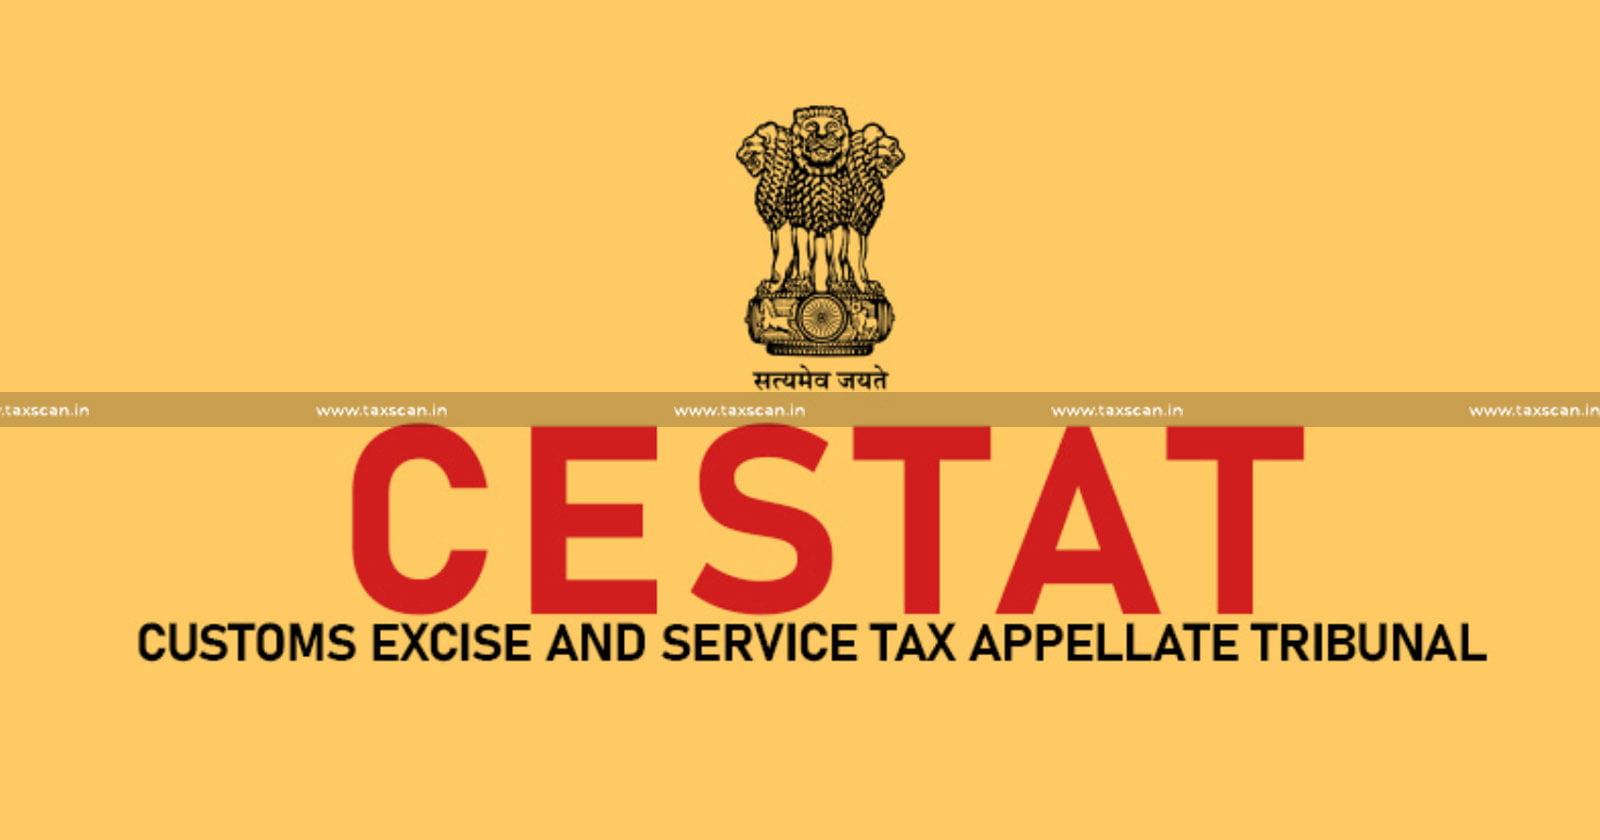 Order - demanding - Service Tax - Convention Services - Sponsorship - CESTAT - taxscan